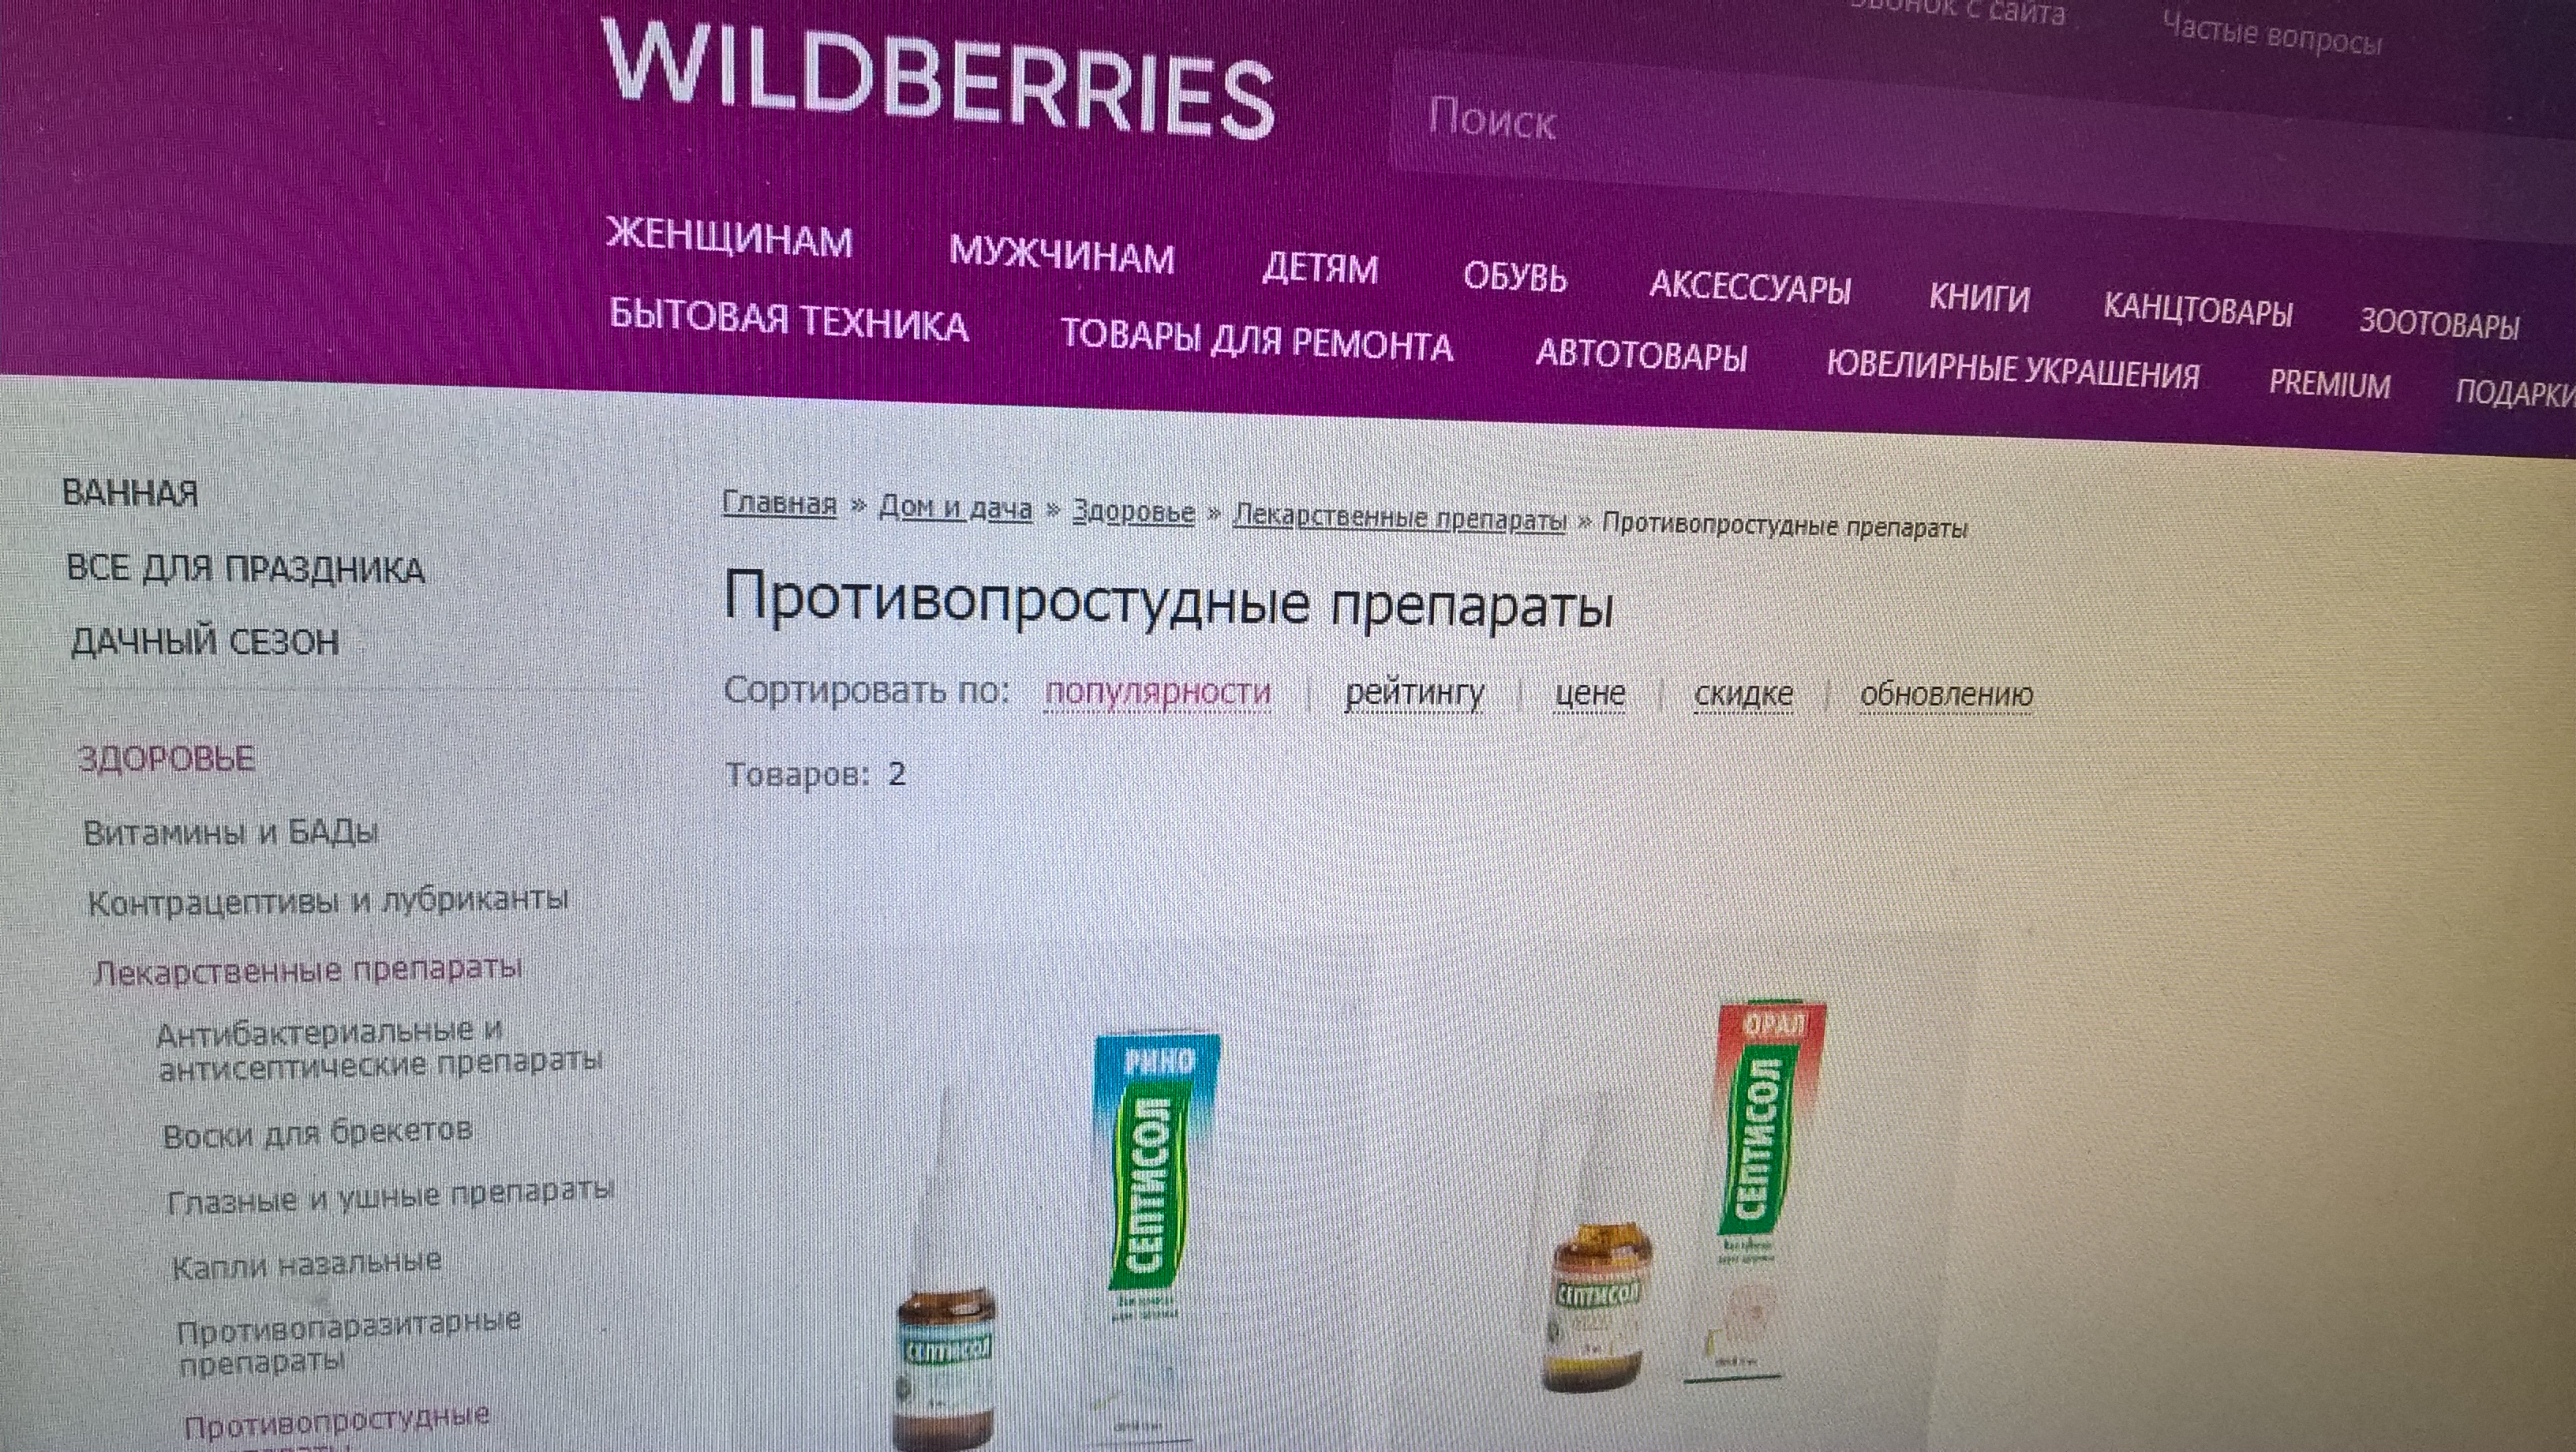 Продажа лекарств на онлайн-площадке «Wildberries»